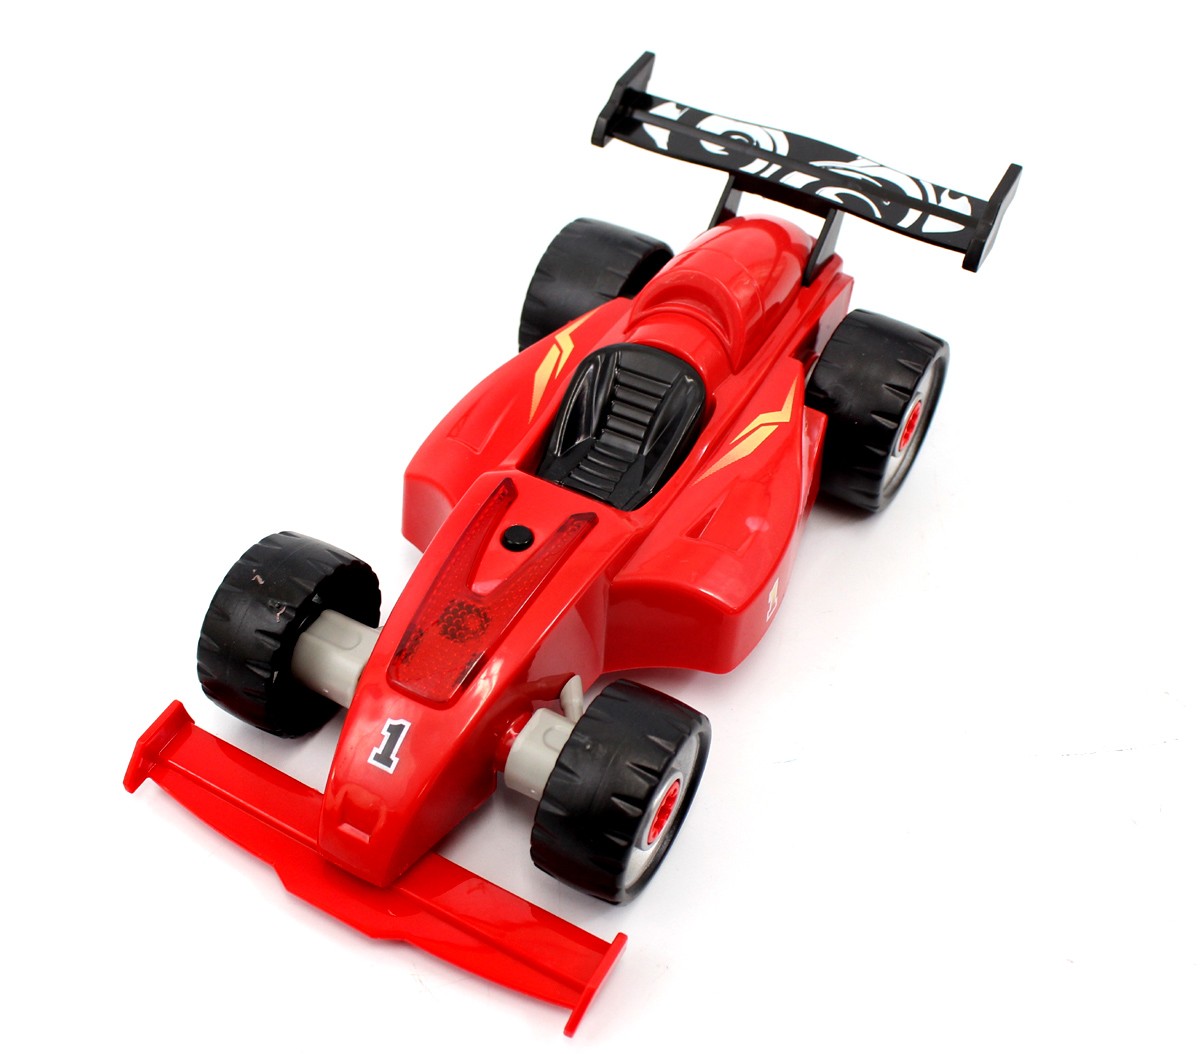 Formula Racing Car Take-A-Part Toy